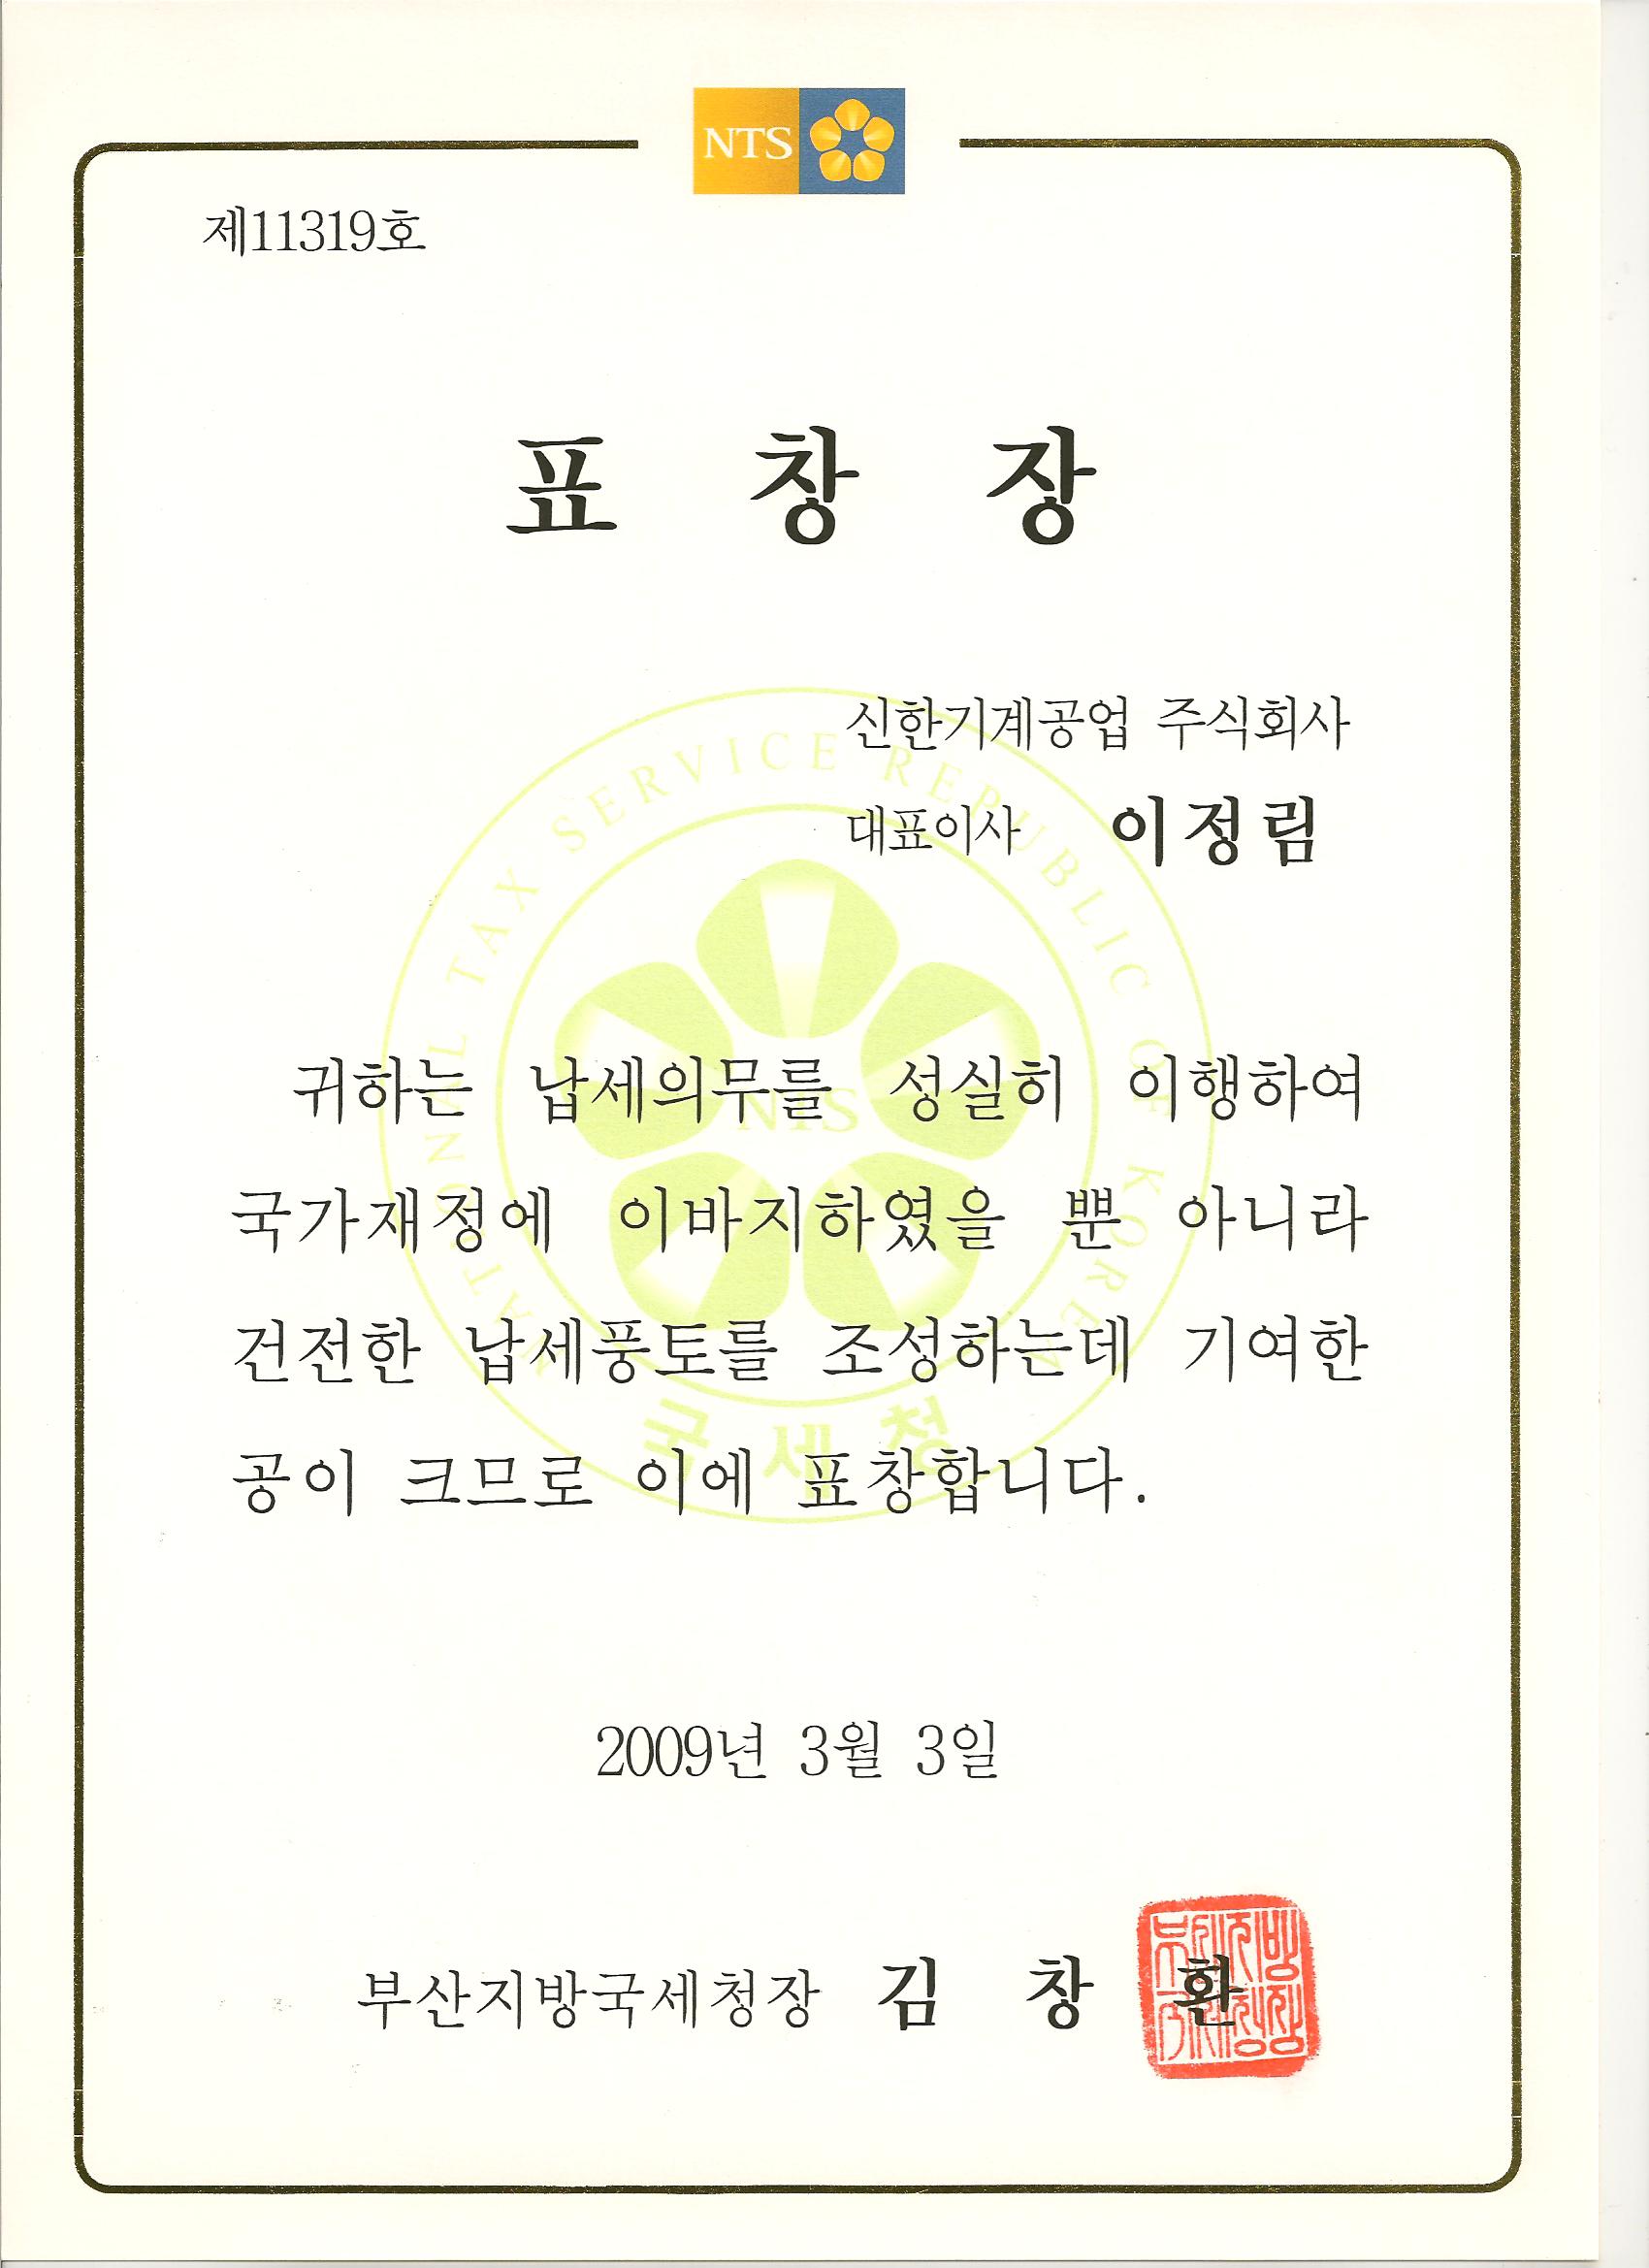 Citation from Busan Regional Tax Office 이미지